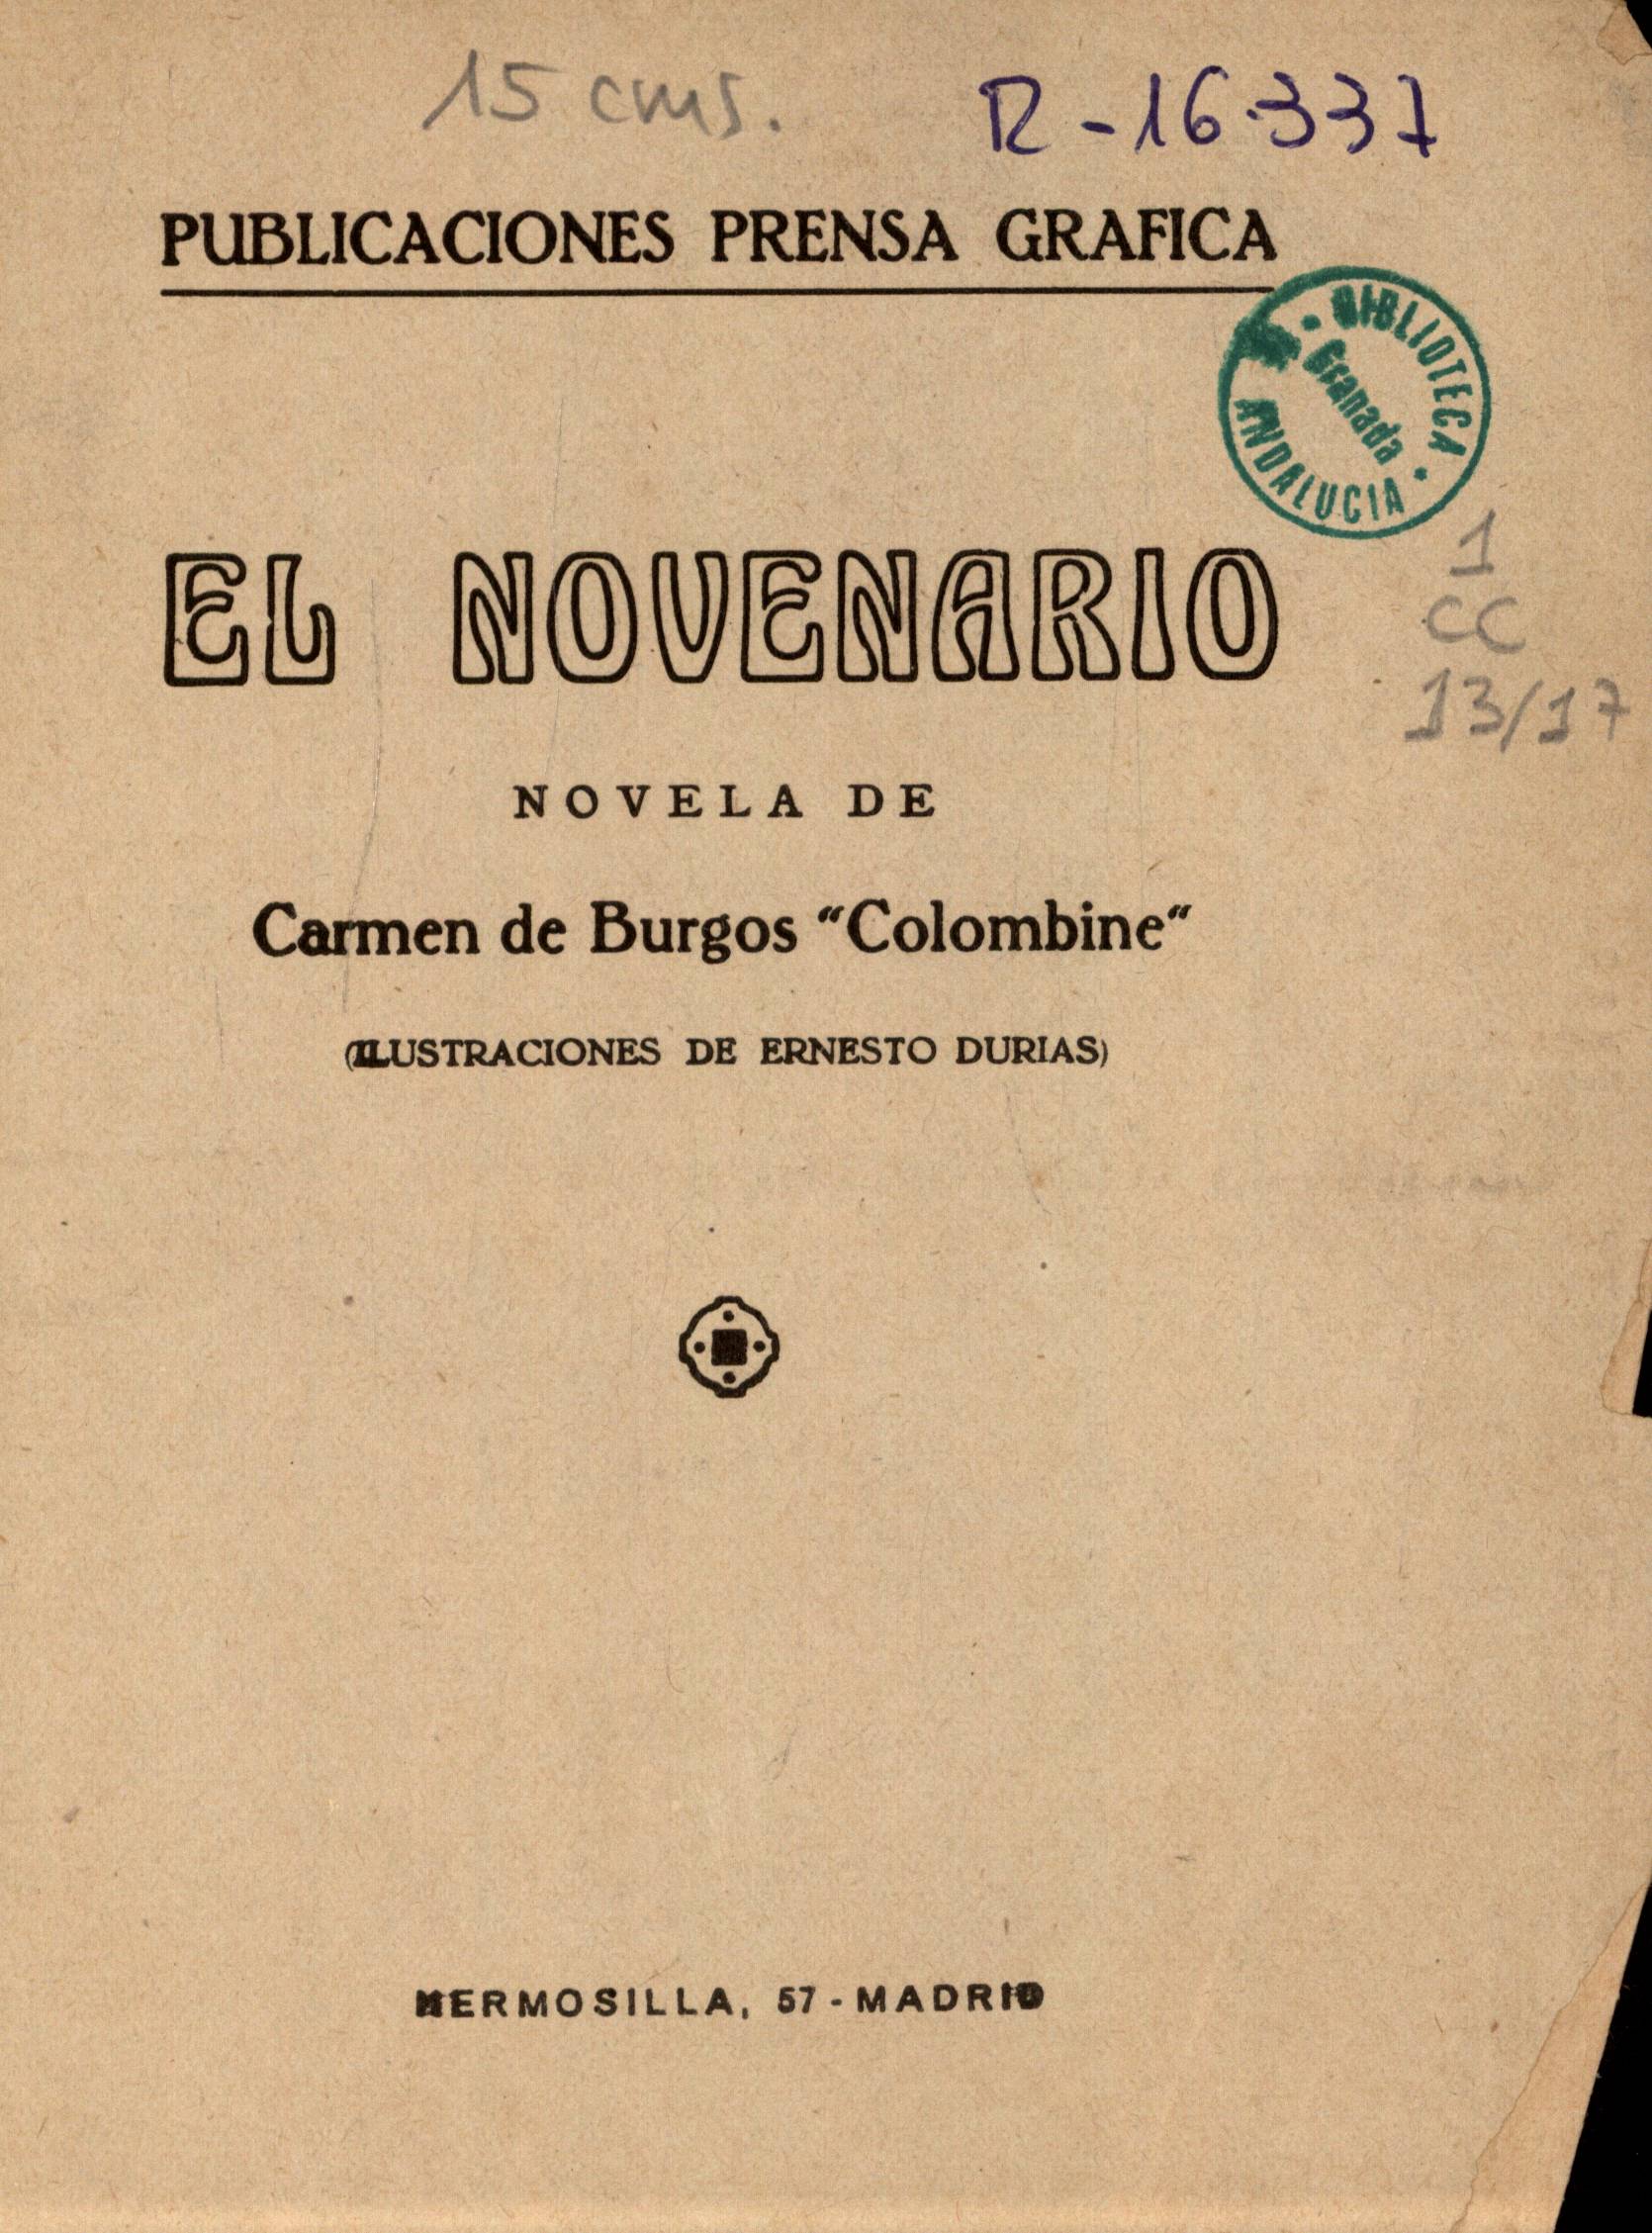 El novenario, novela de Carmen de Burgos 